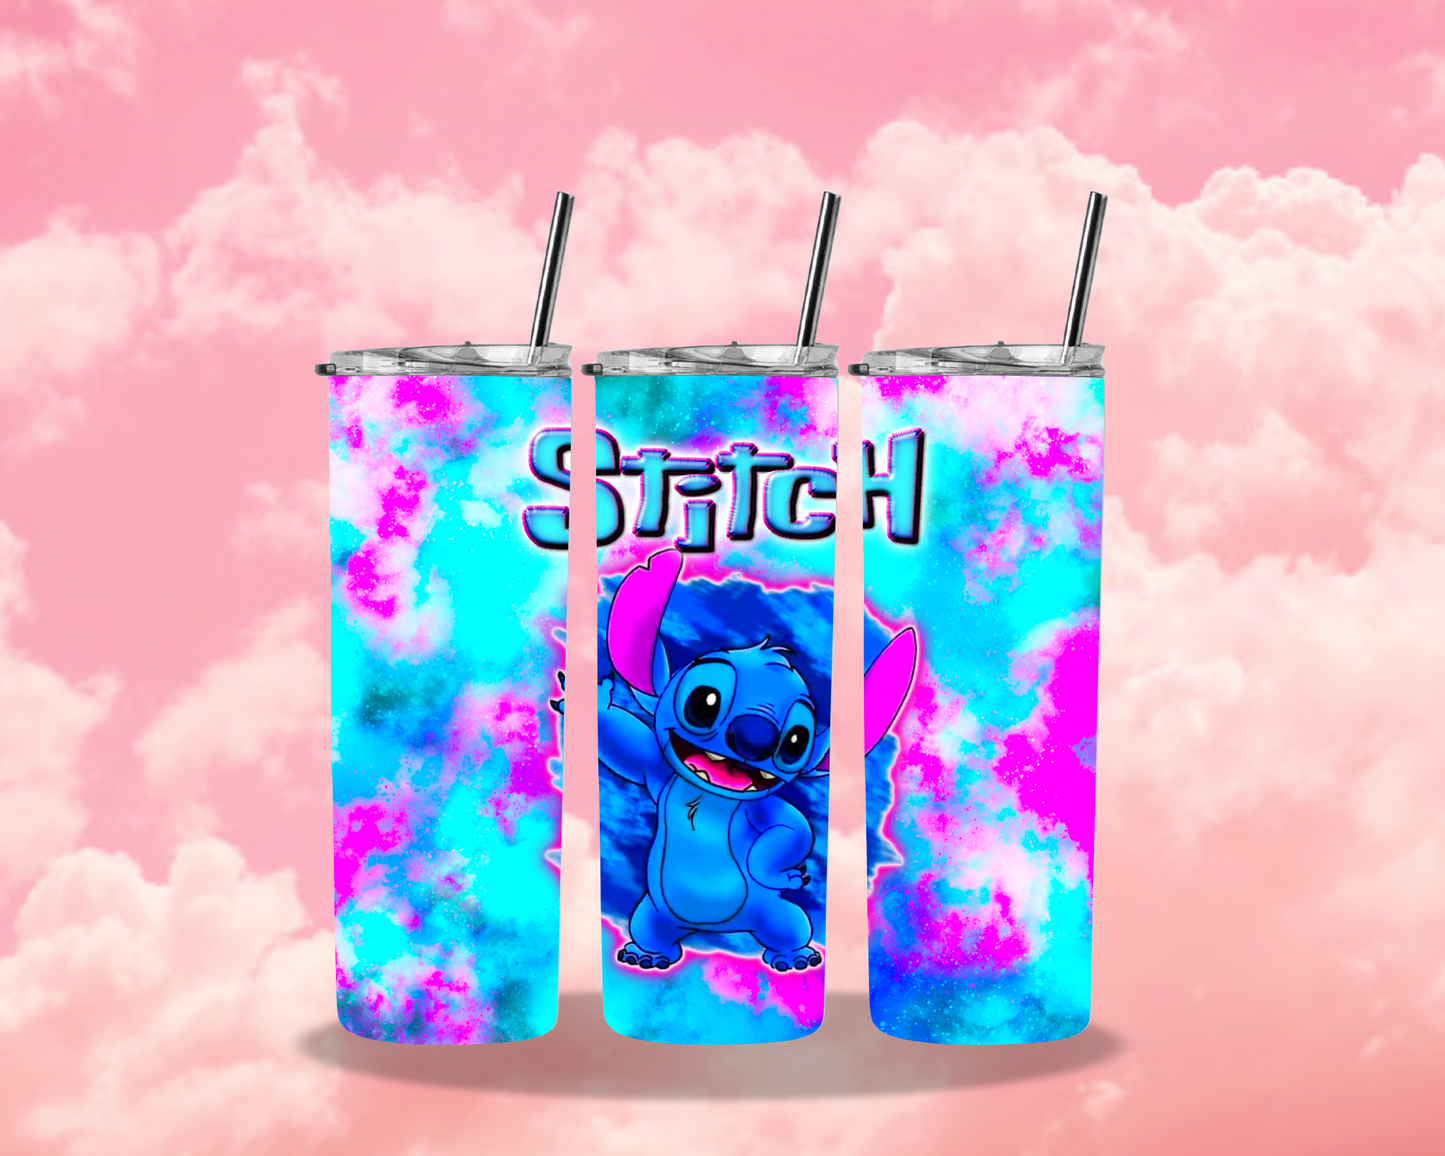 Cotton candy Stitch